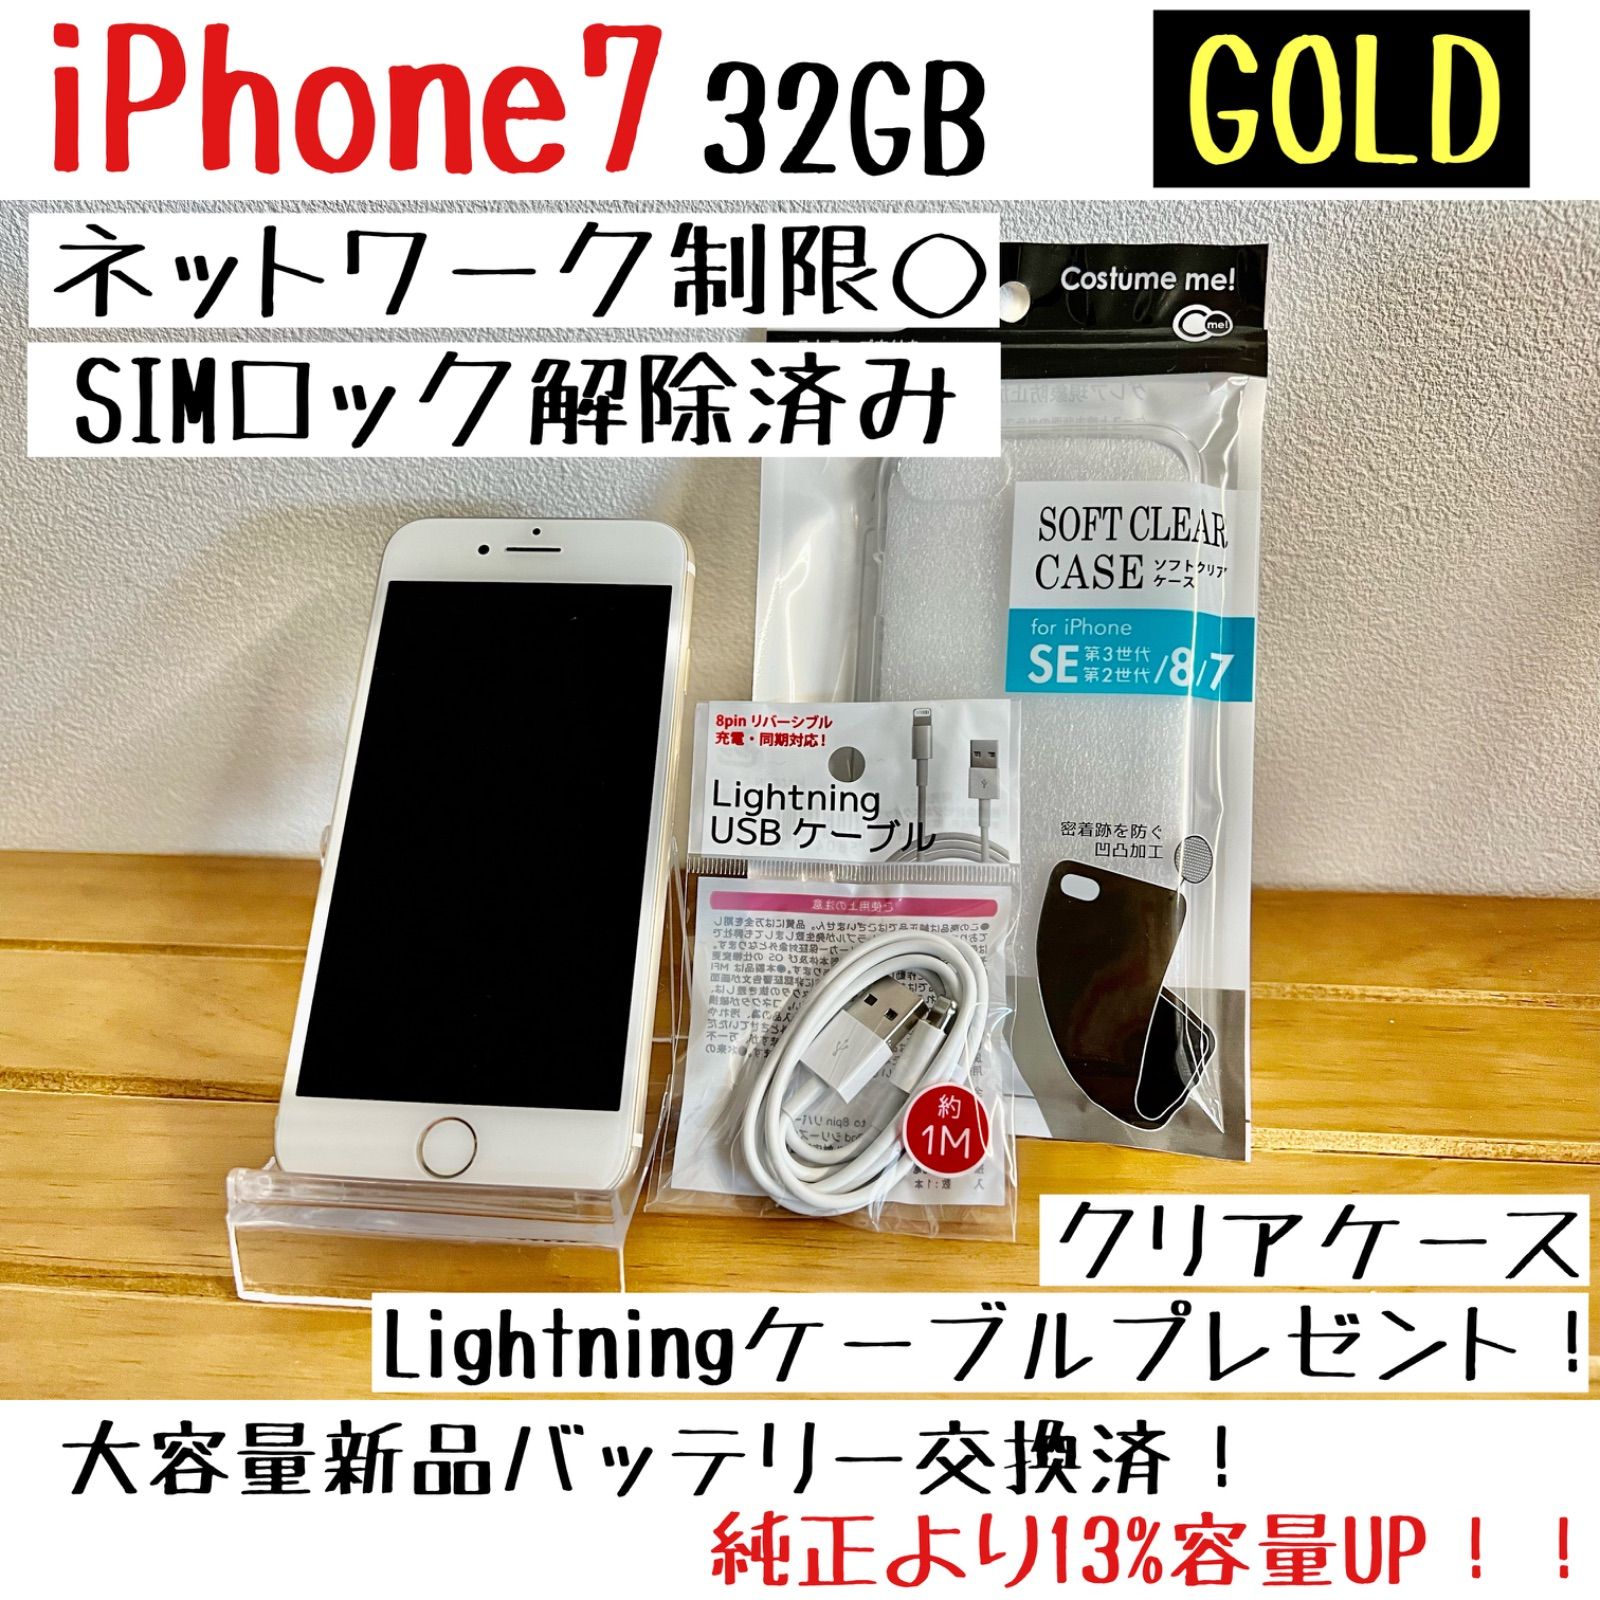 iPhone7 32GB GOLD SIMフリー化済